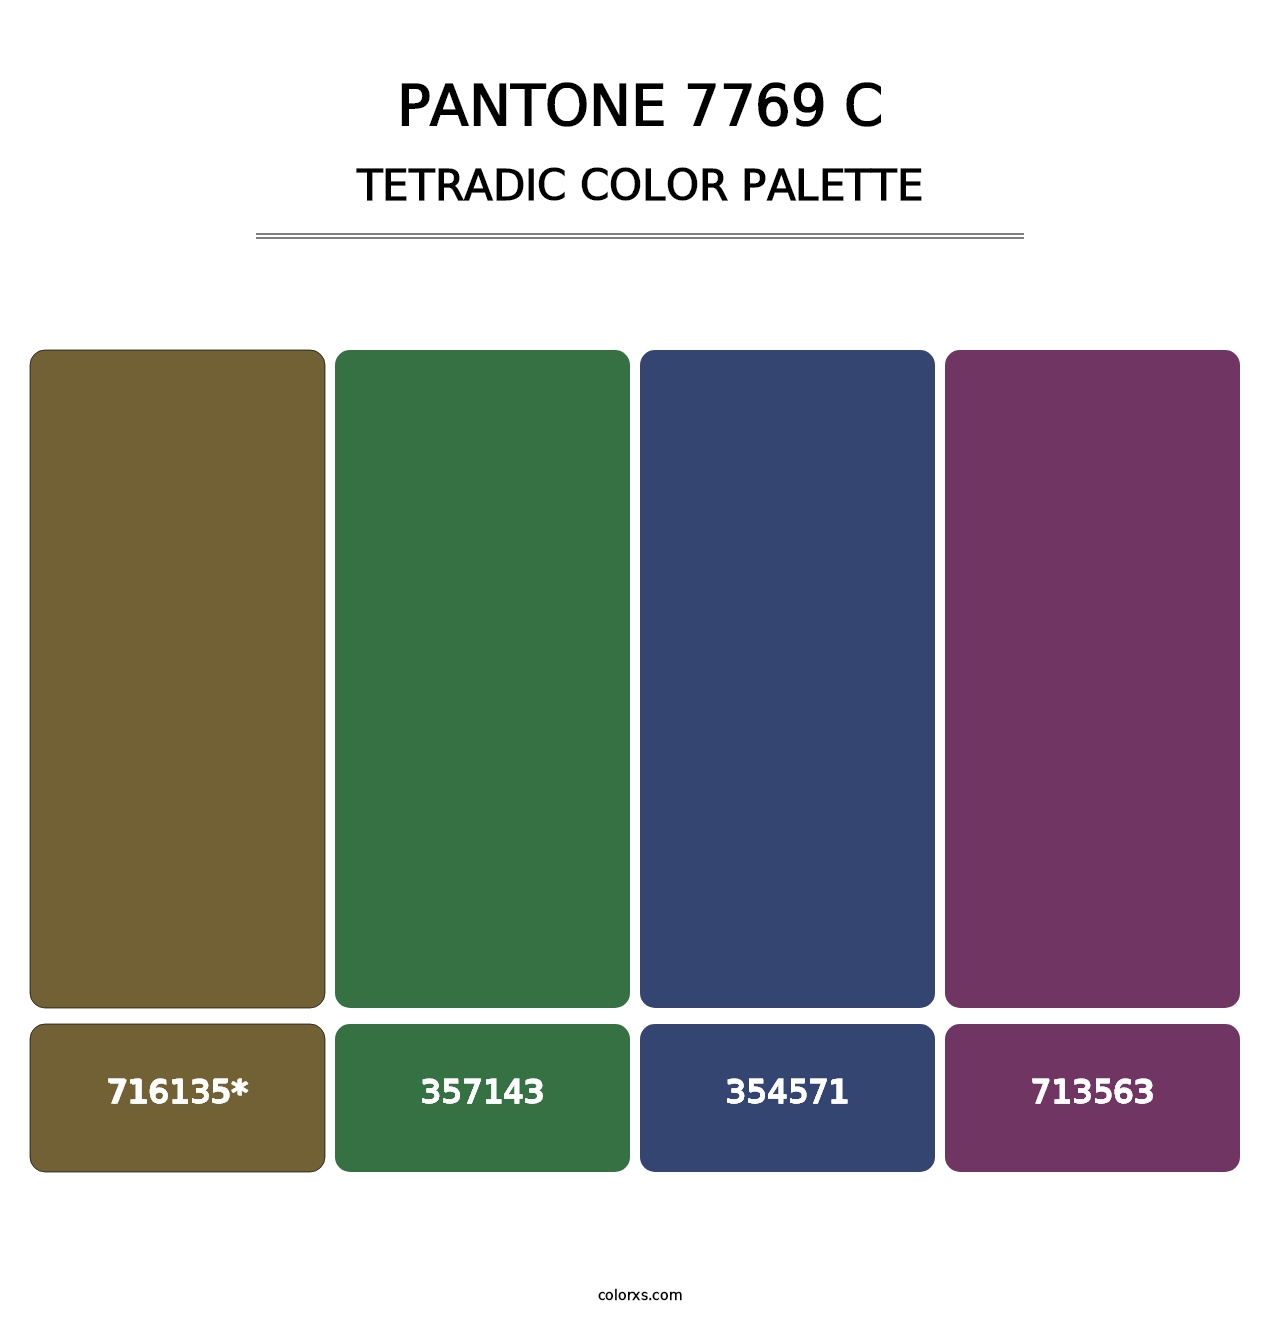 PANTONE 7769 C - Tetradic Color Palette